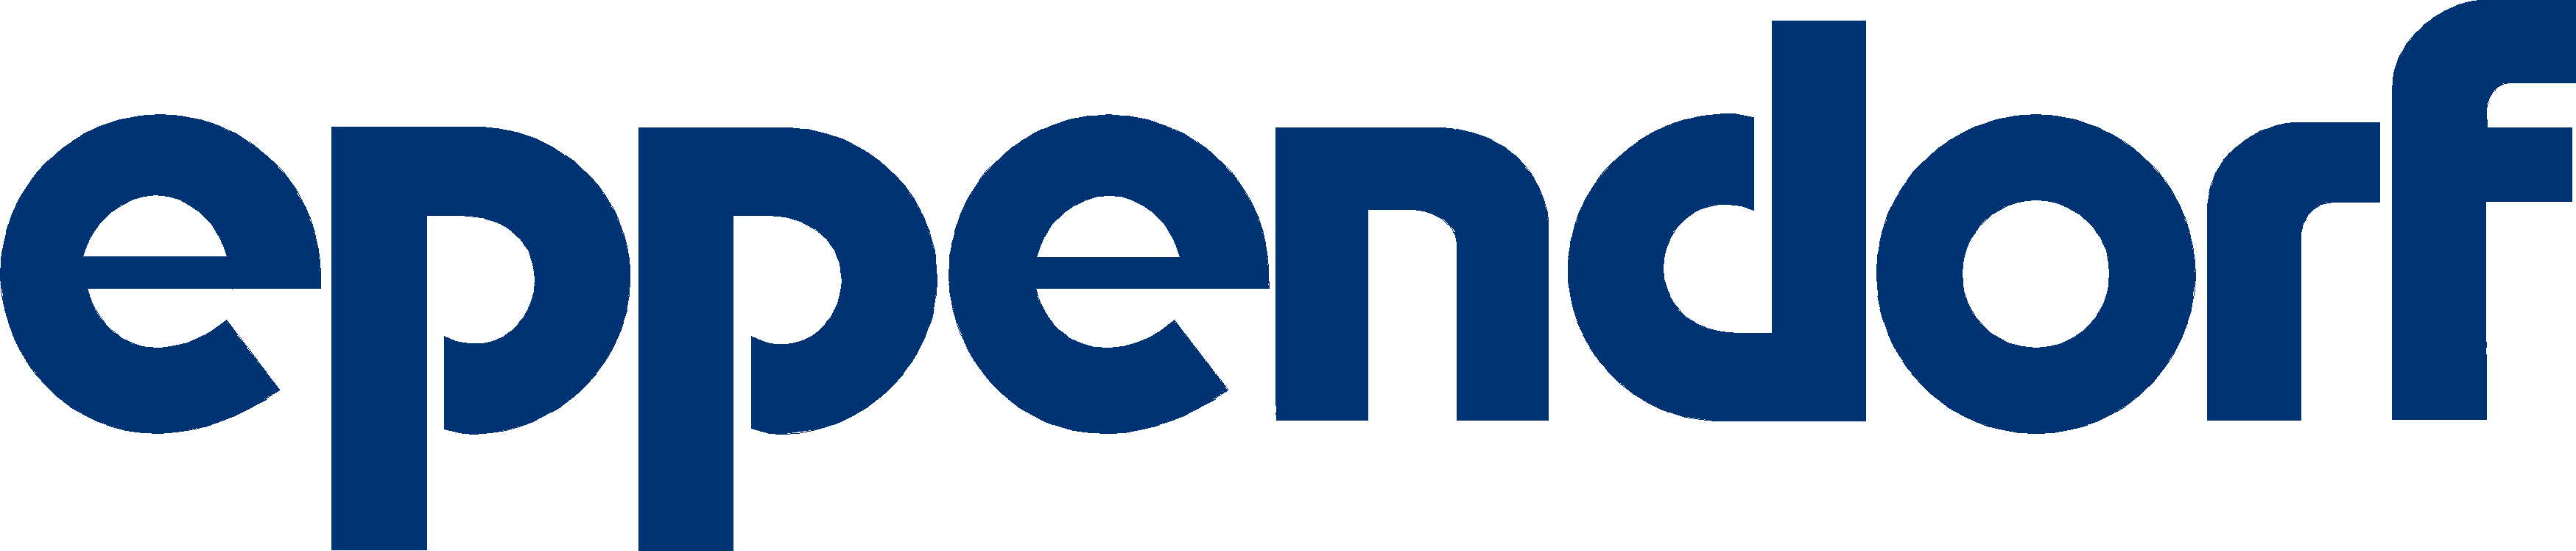 logo Eppendorf